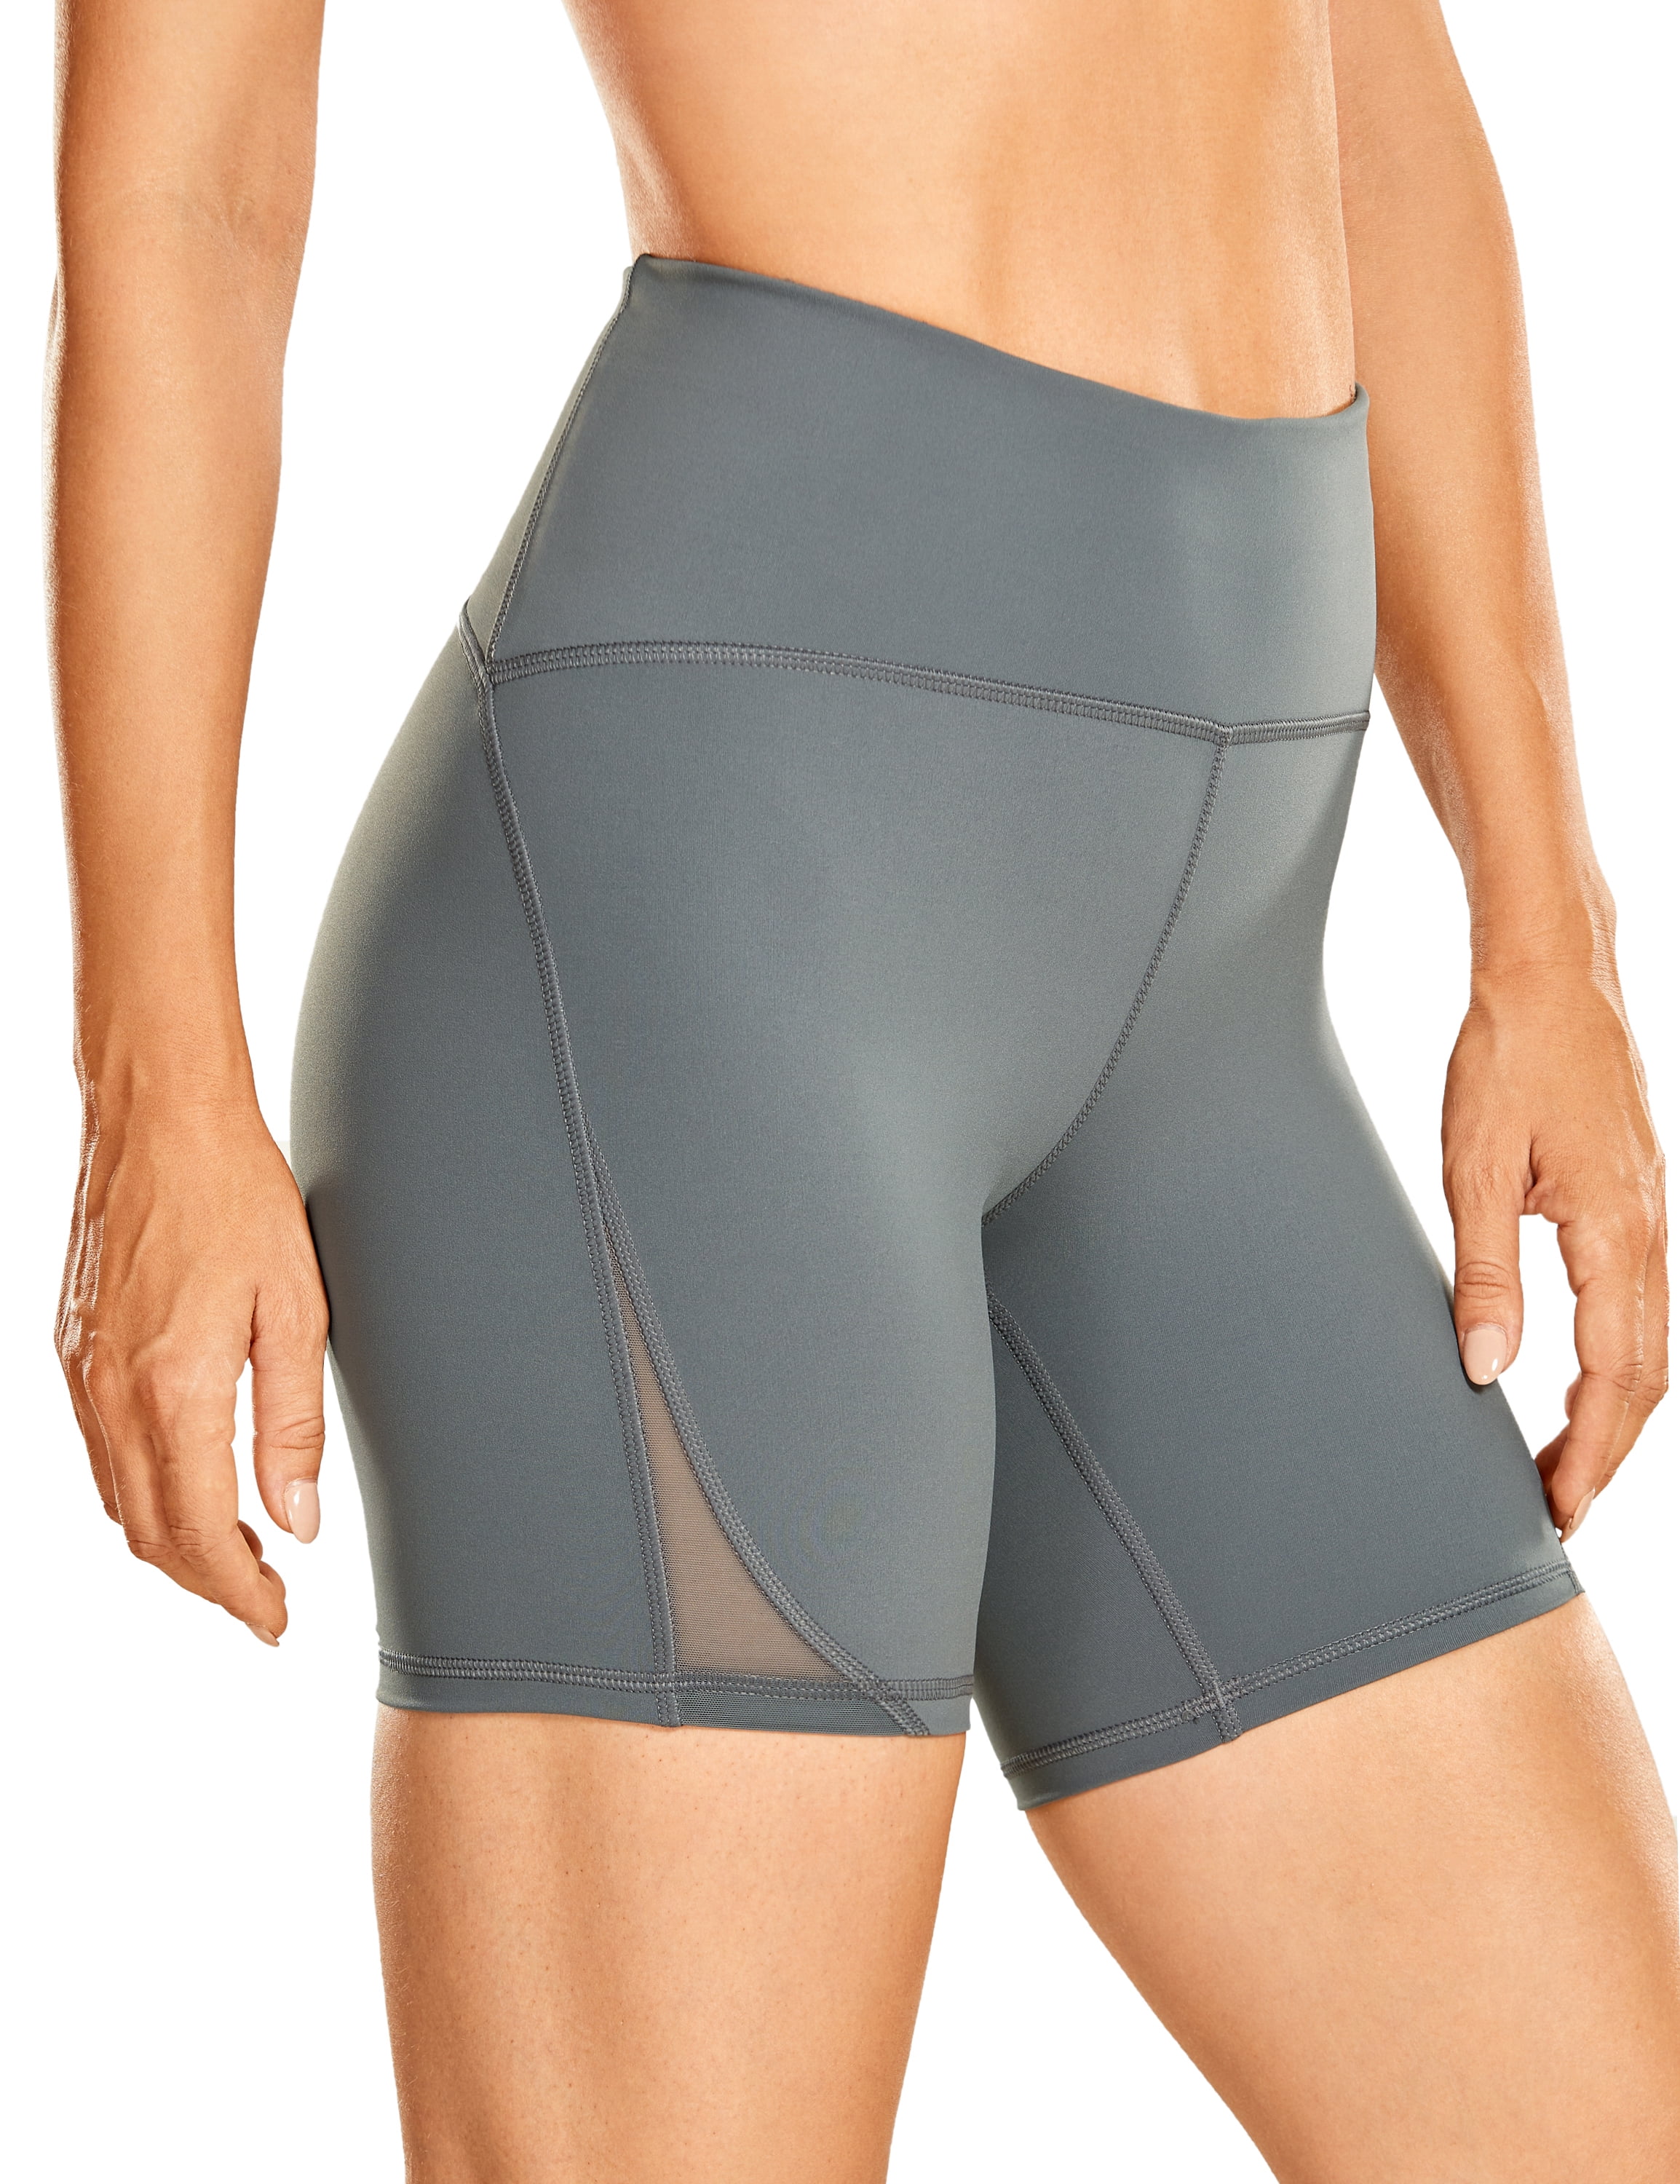 CRZ YOGA Women's Naked Feeling High Waisted Biker Shorts Tummy Control Sports Workout Yoga Shorts 6 Inches 